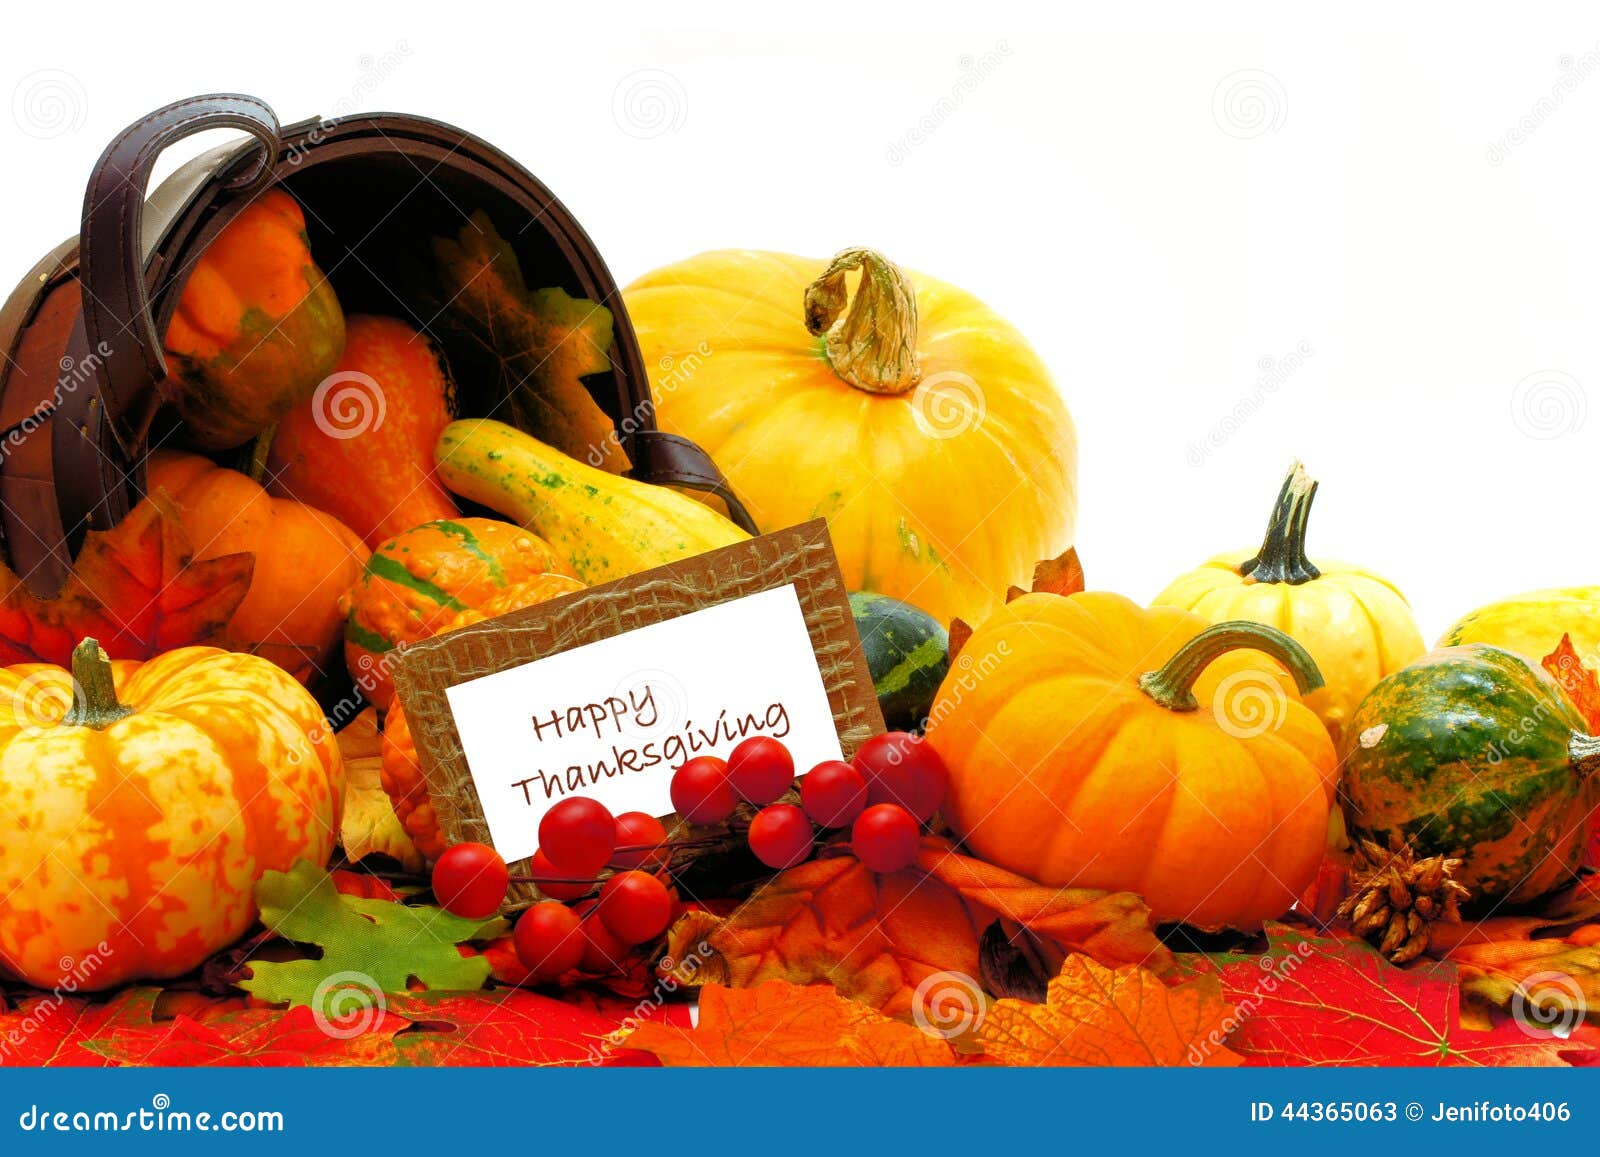 Happy Thanksgiving stock image. Image of leaf, crop, bucket - 44365063